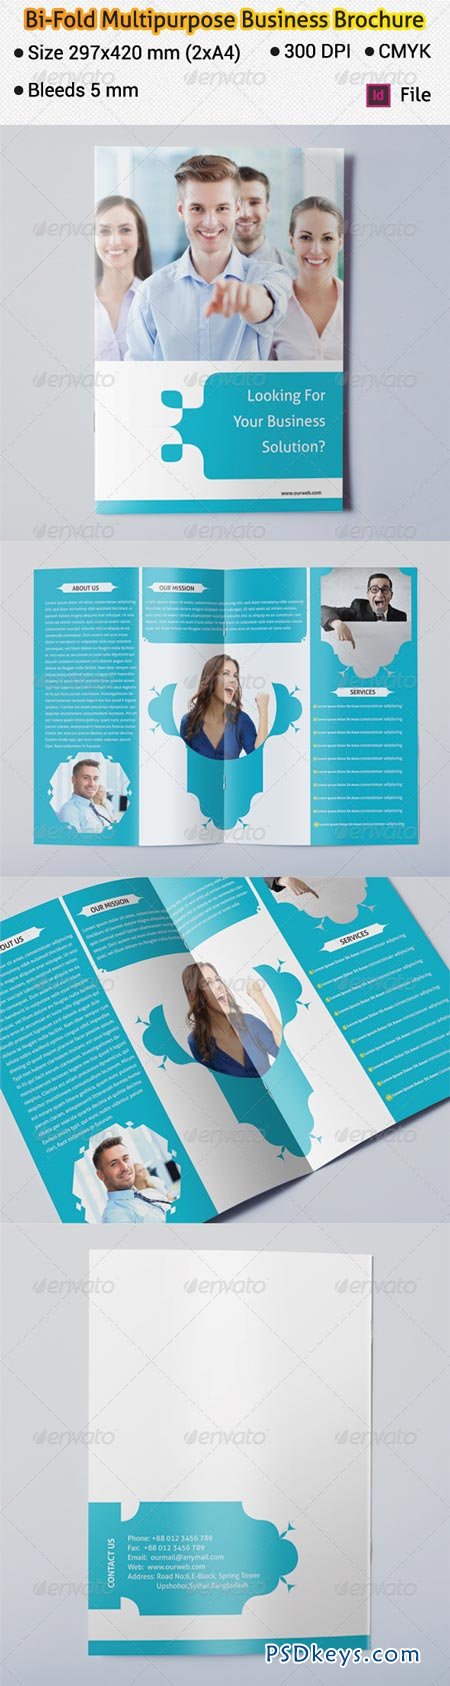 Bi-fold Multipurpose Business Brochure 6951483